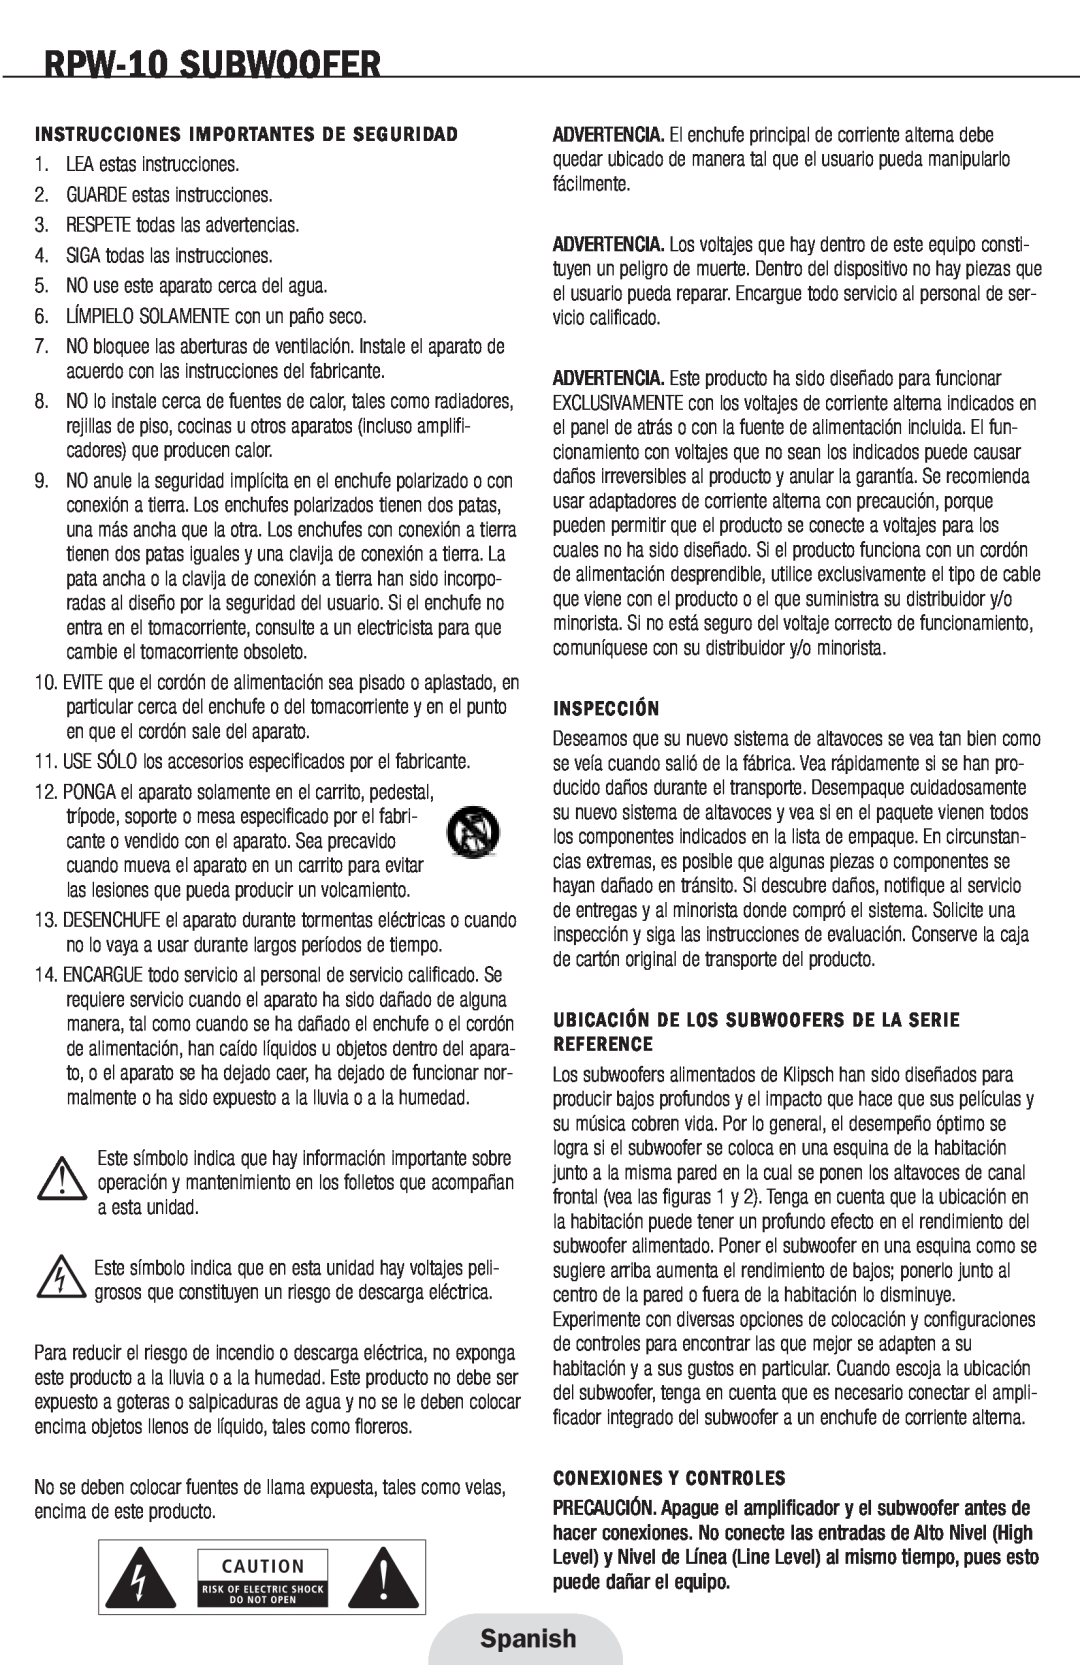 Klipsch manual Spanish, RPW-10SUBWOOFER 